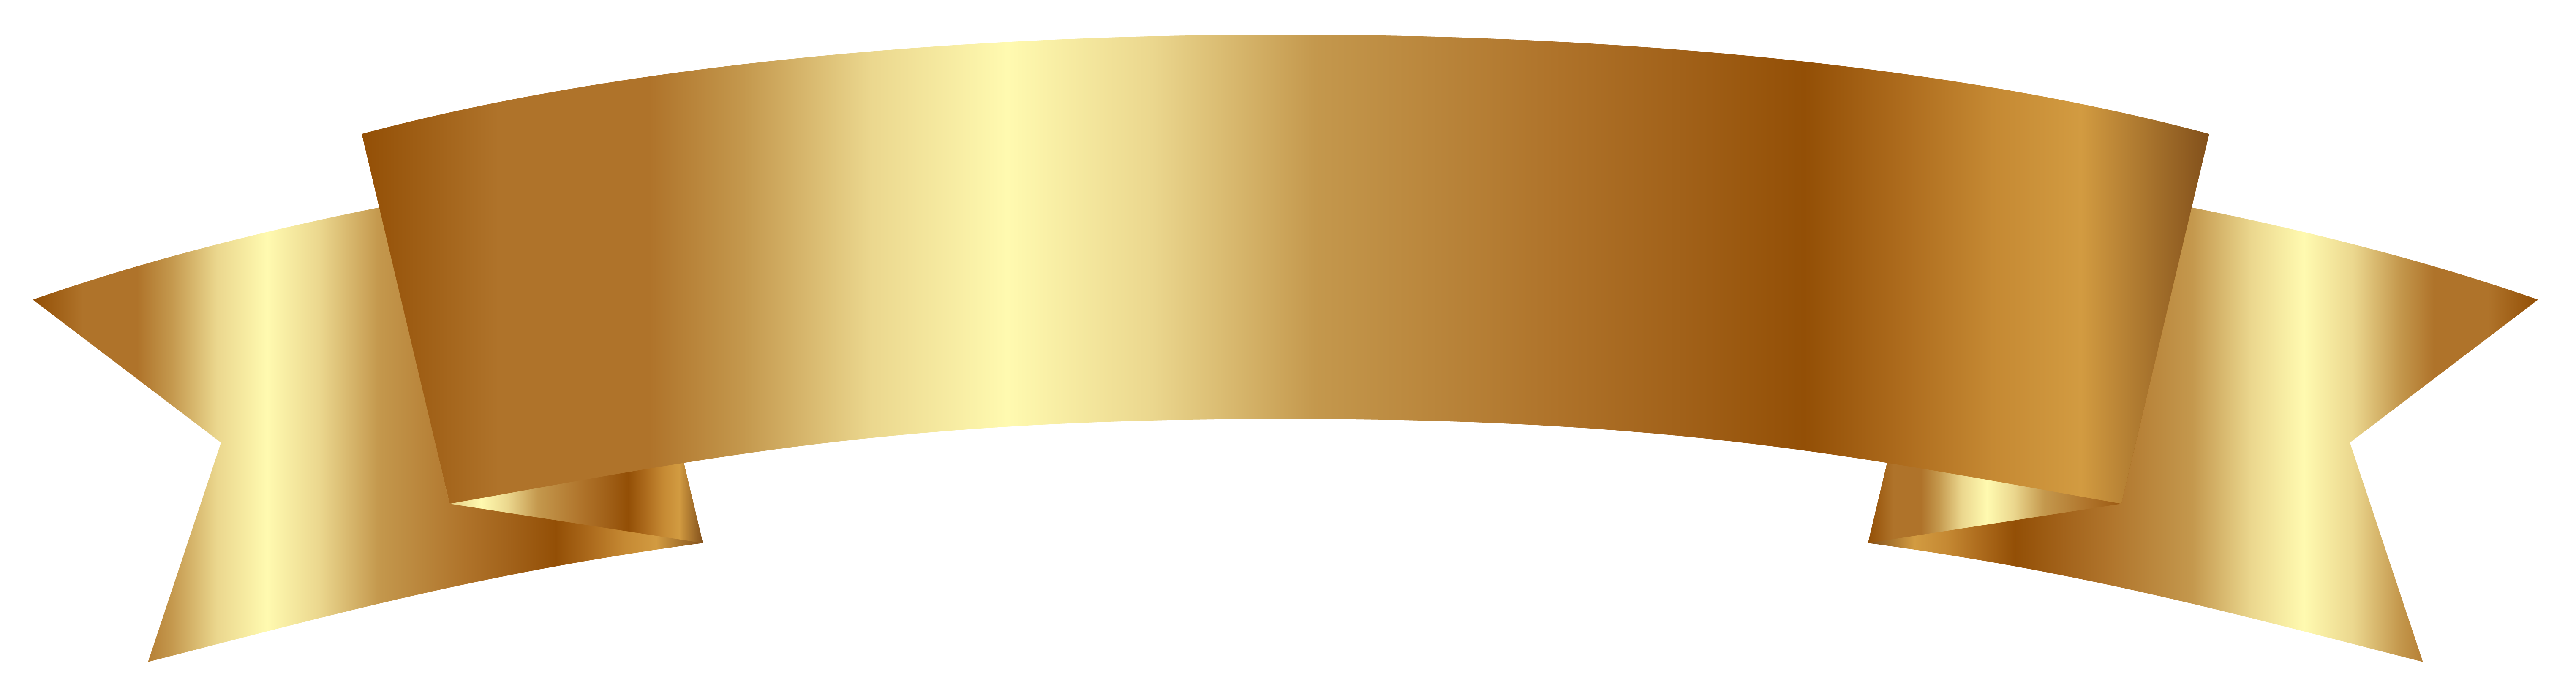 Золотая лента баннер PNG Image